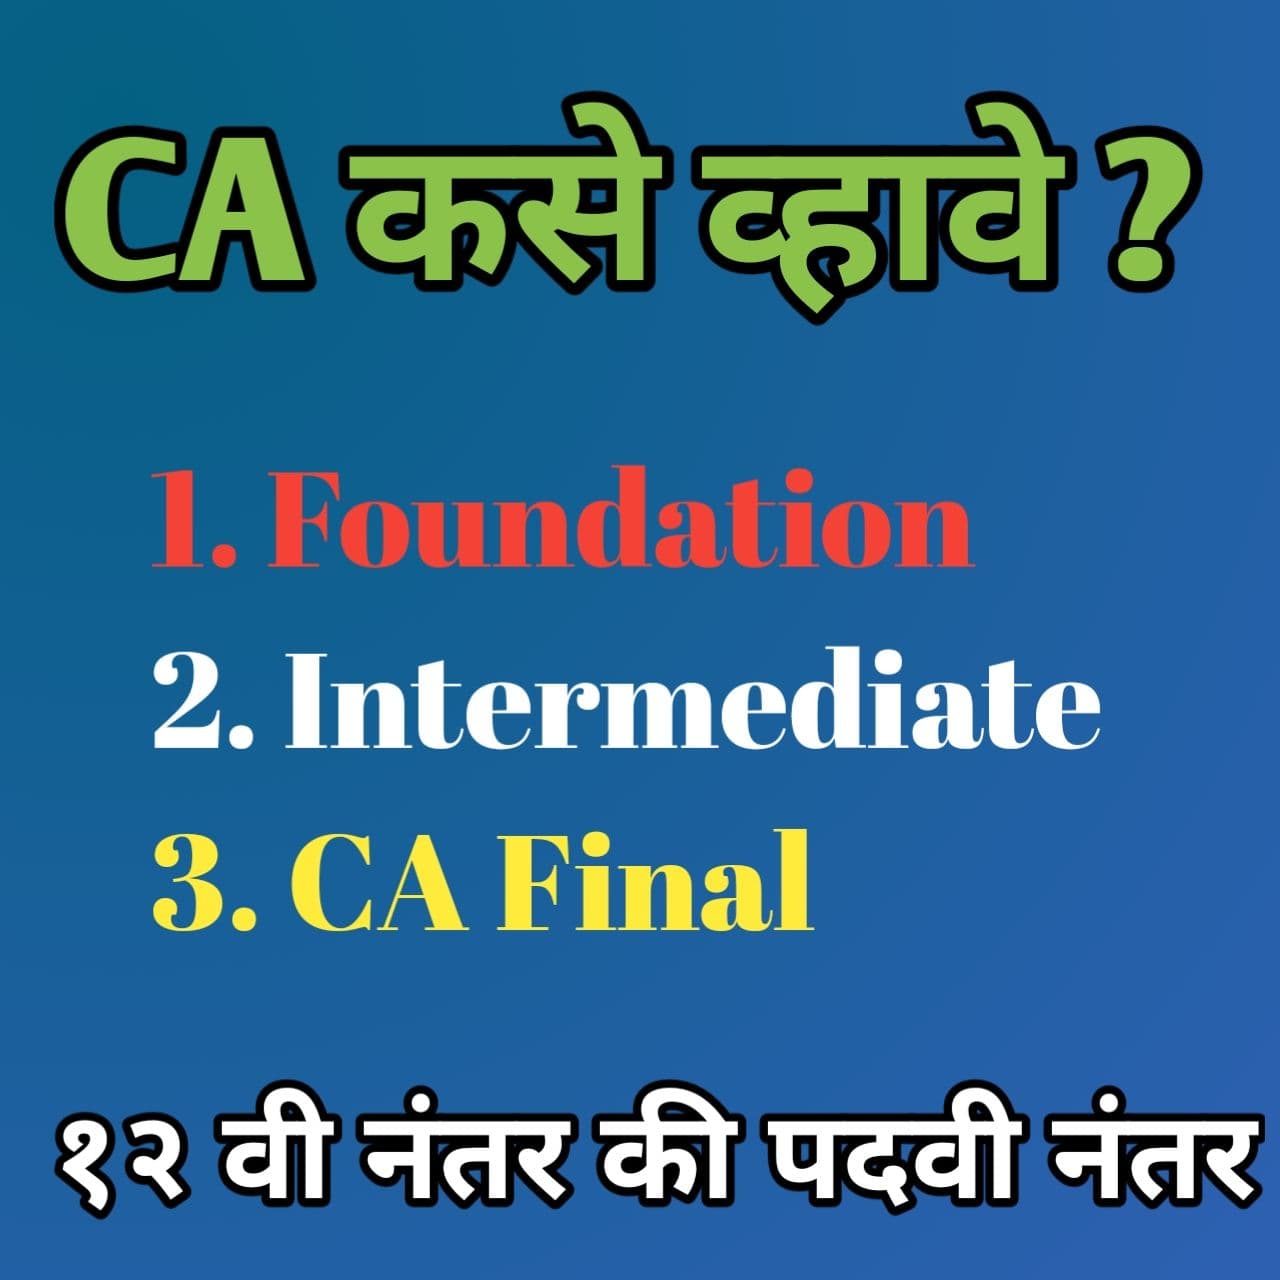 ca information in Marathi